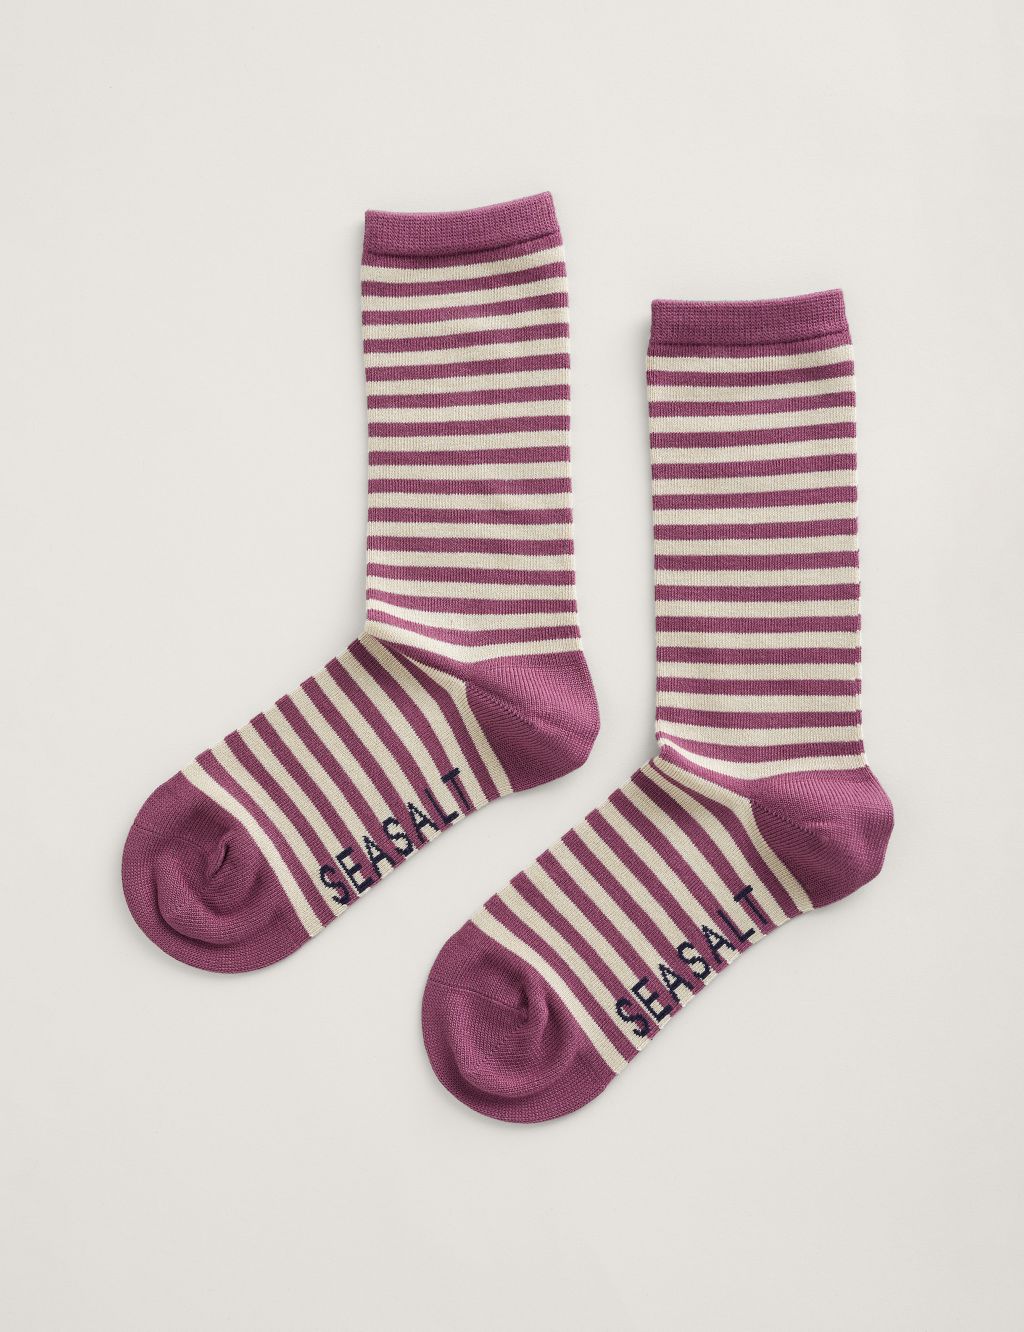 Striped Ankle High Socks image 1